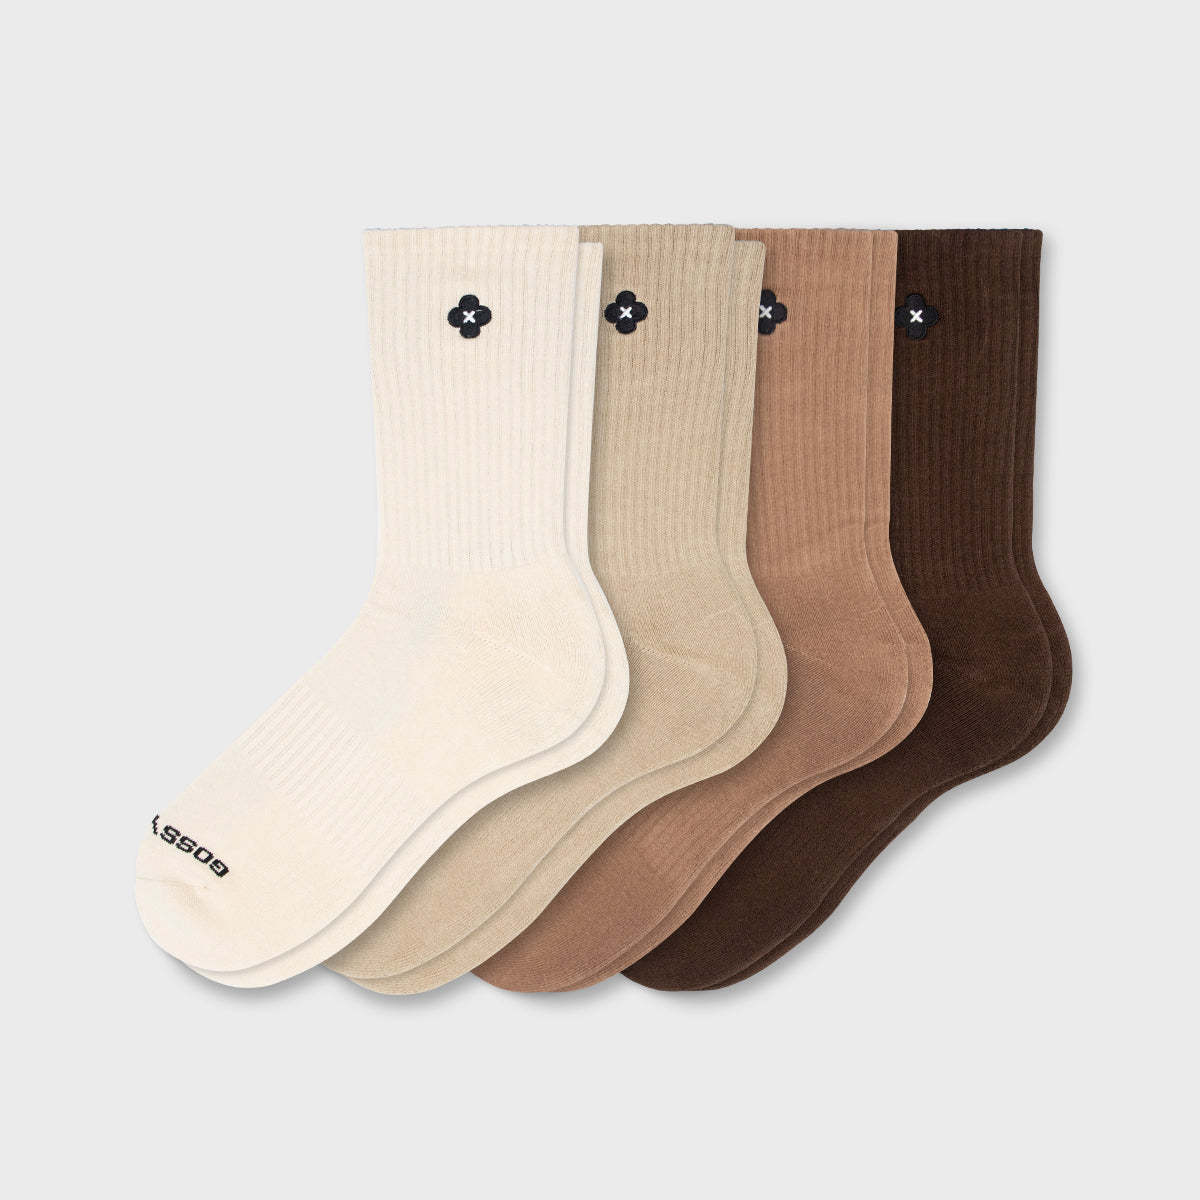 Buy Sock Bundles and Packs - Colorful, Soft, Premium Cotton Socks